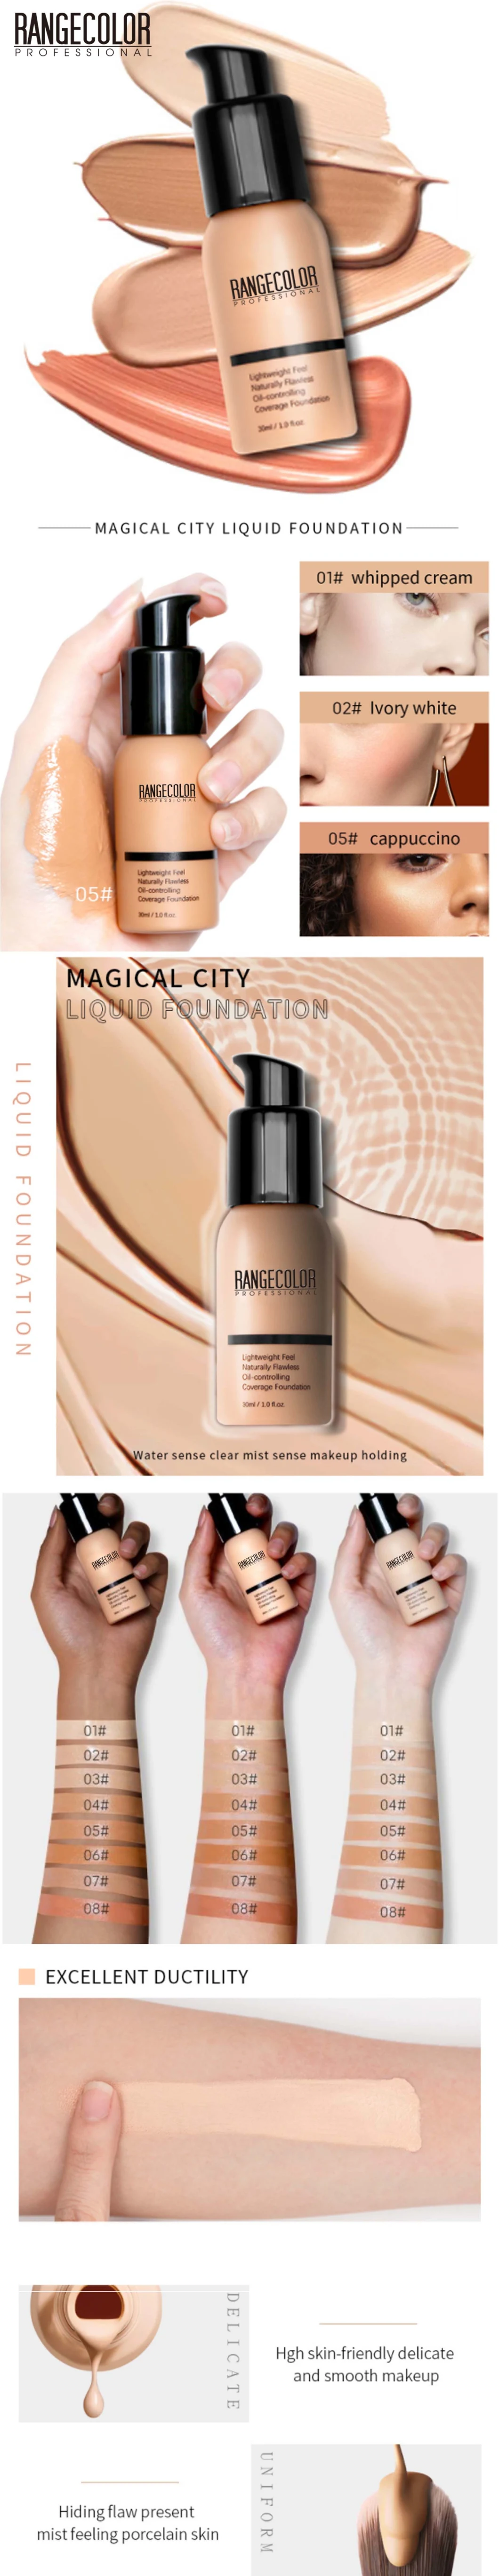 Private Label Long Lasting Full Coverage Makeup Liquid Foundation for Dark Skin, Natural, White Skin